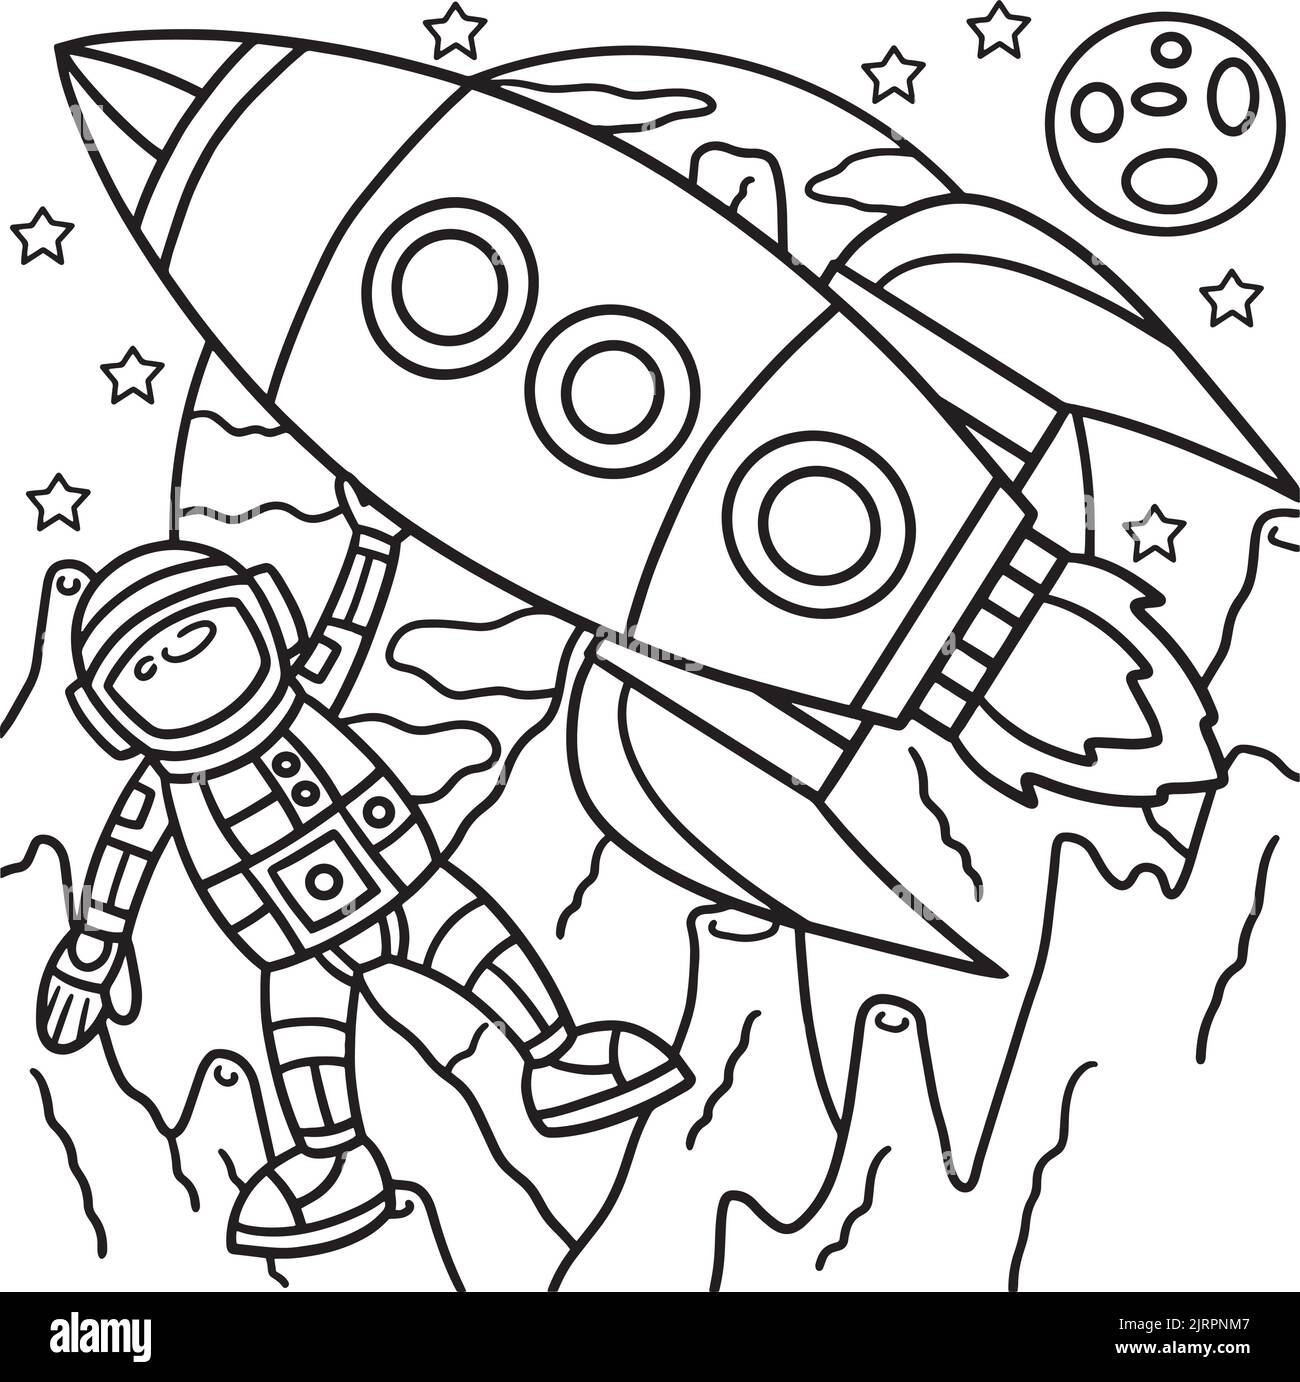 Astronaut Space Rocket Ship Coloring Page für Kinder Stock Vektor